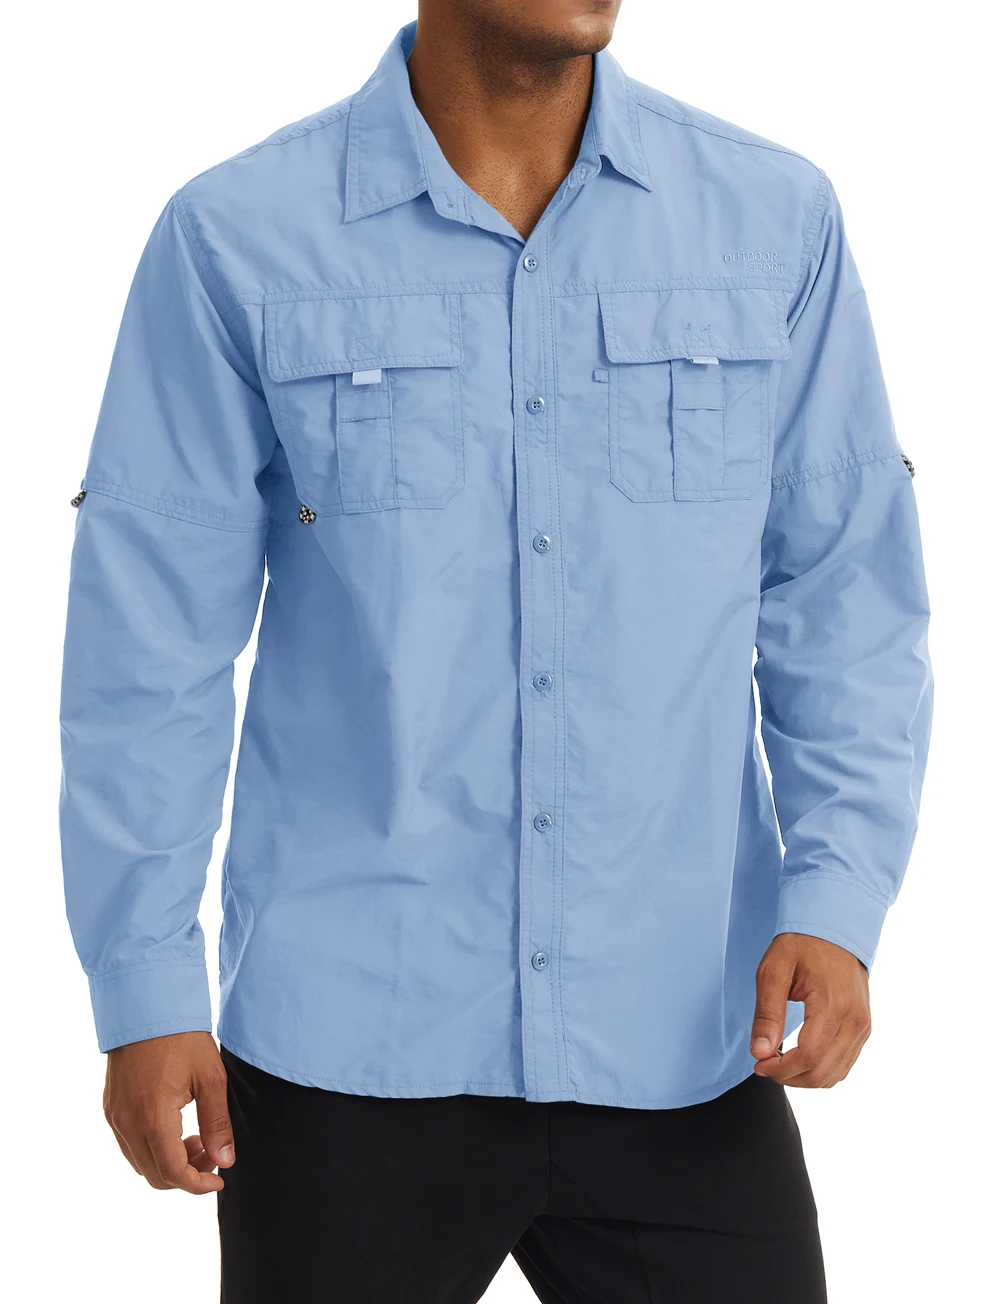 Wholesale Men's Nylon Fishing Shirt Quick Dry Tactical Hiking Shirts Long Sleeve Outdoor Cargo Shirt